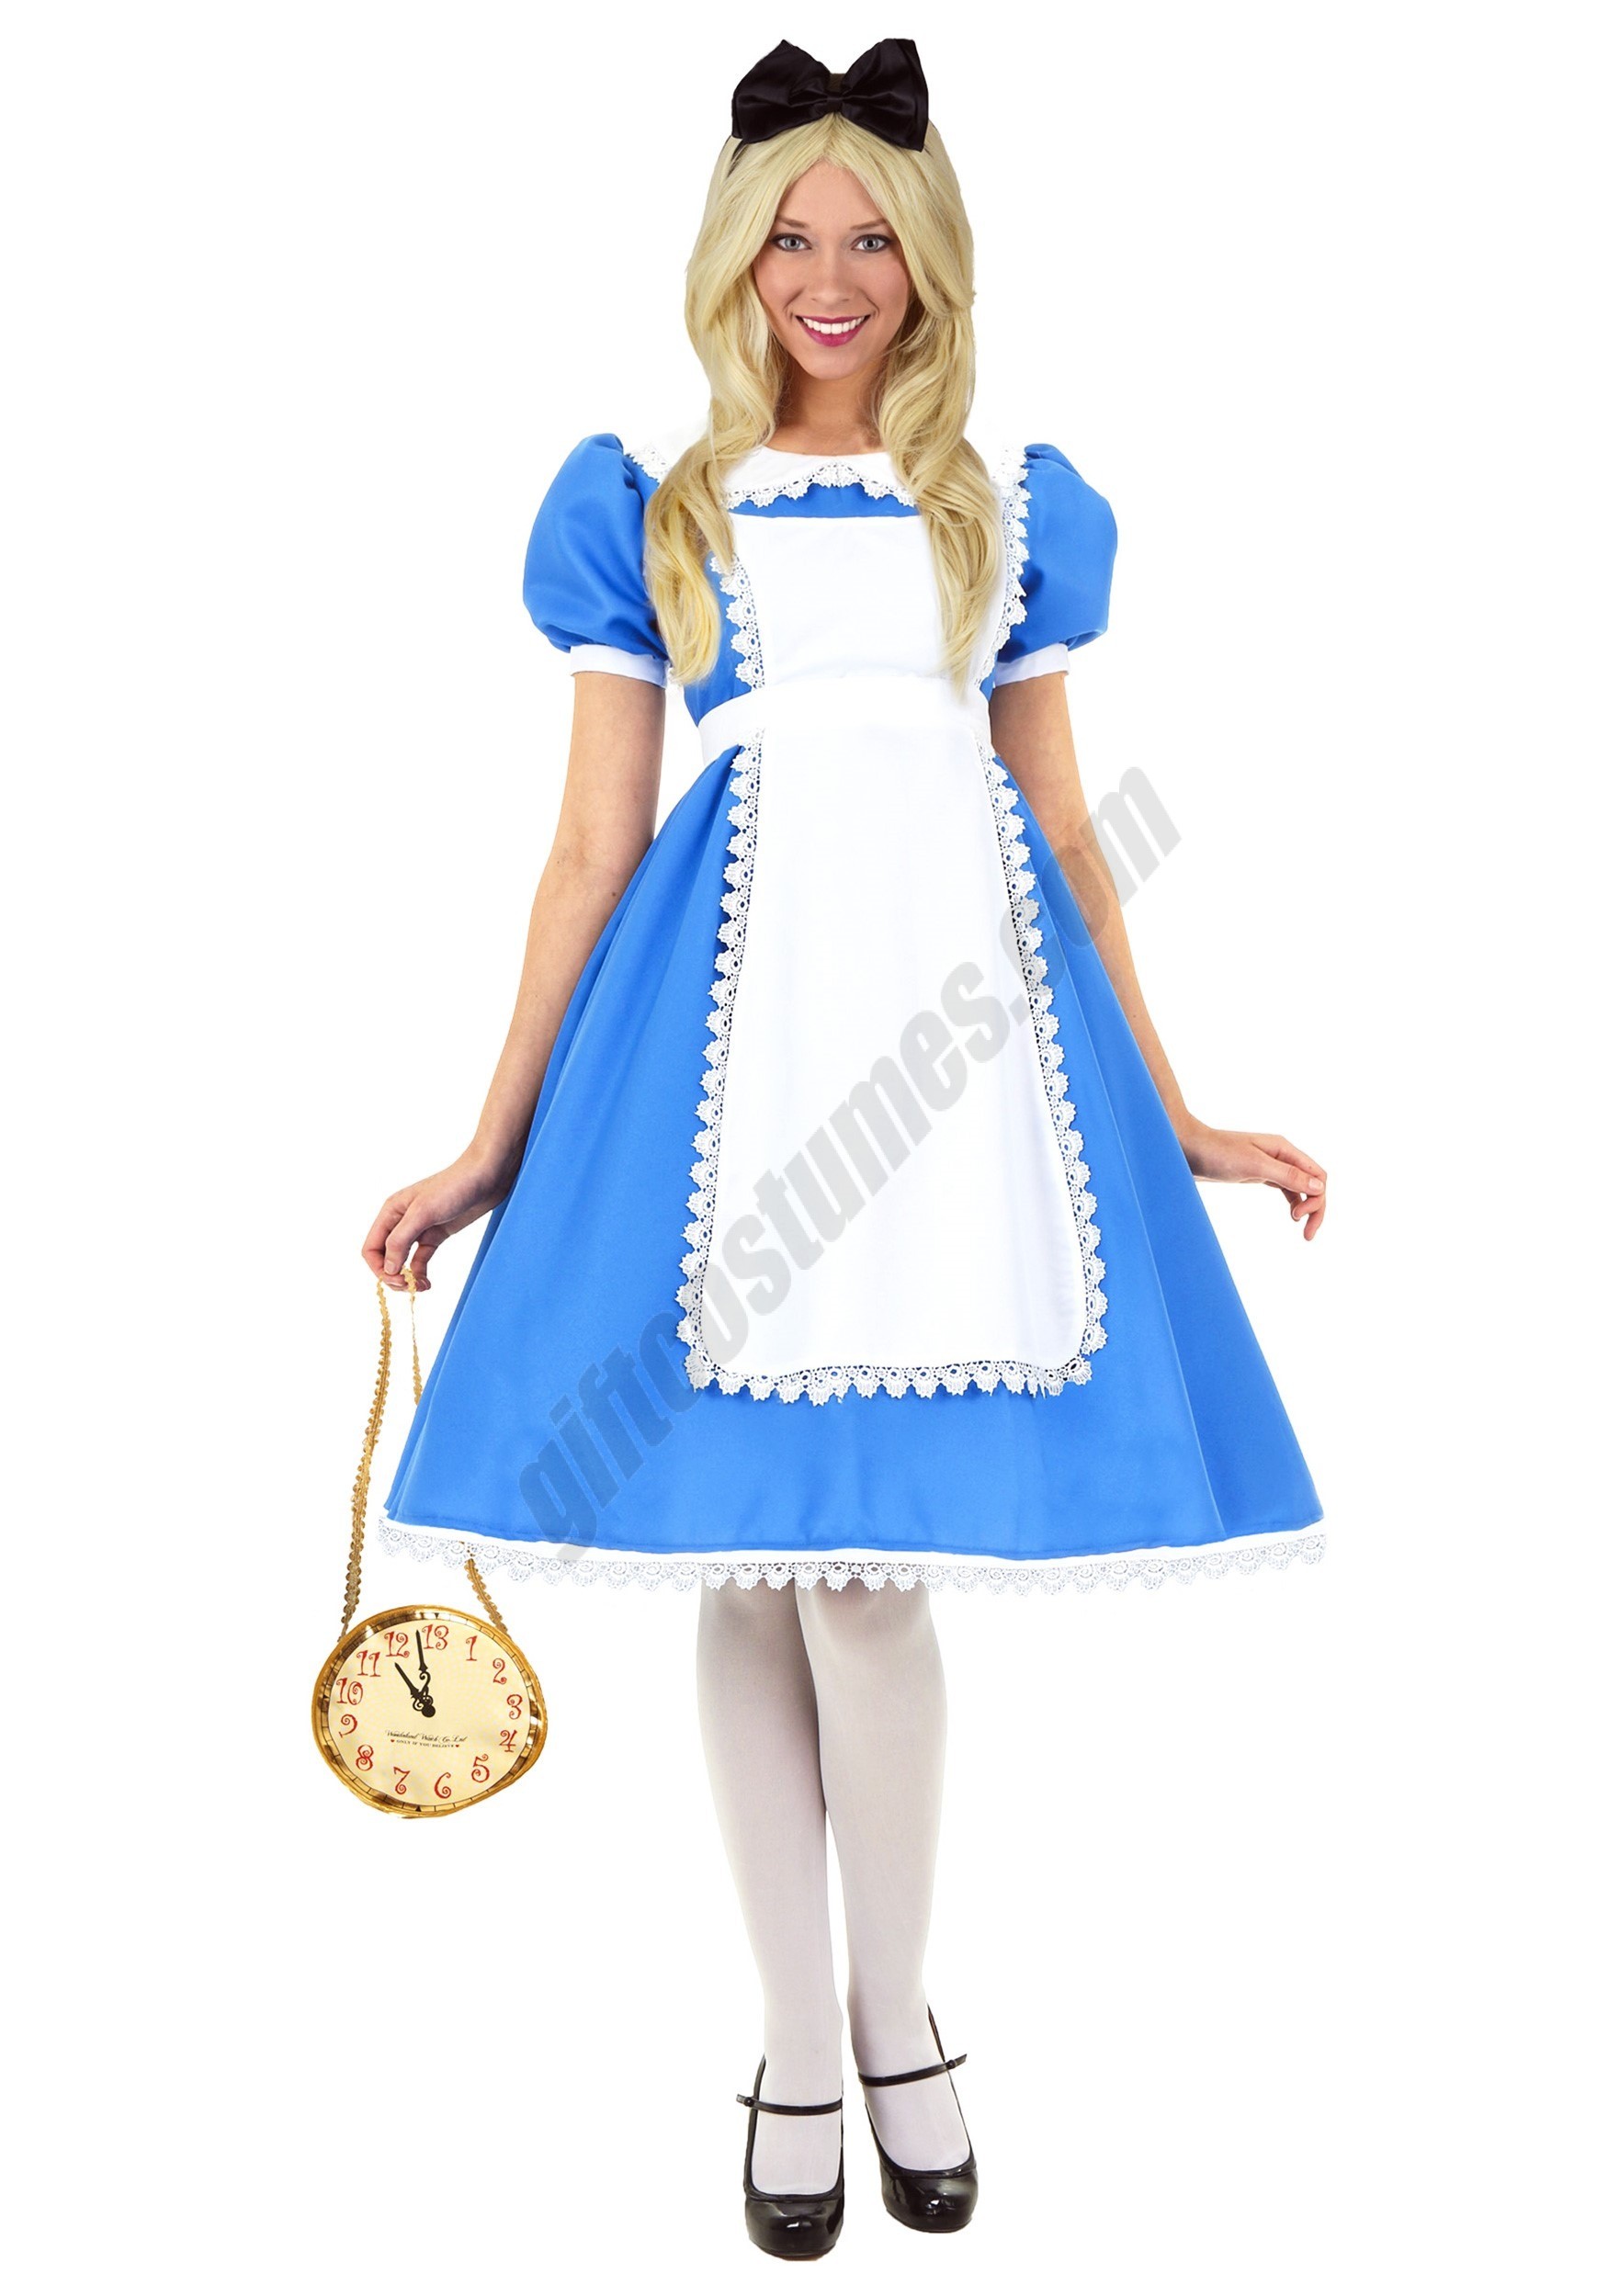 Plus Size Supreme Alice Costume Promotions - Plus Size Supreme Alice Costume Promotions